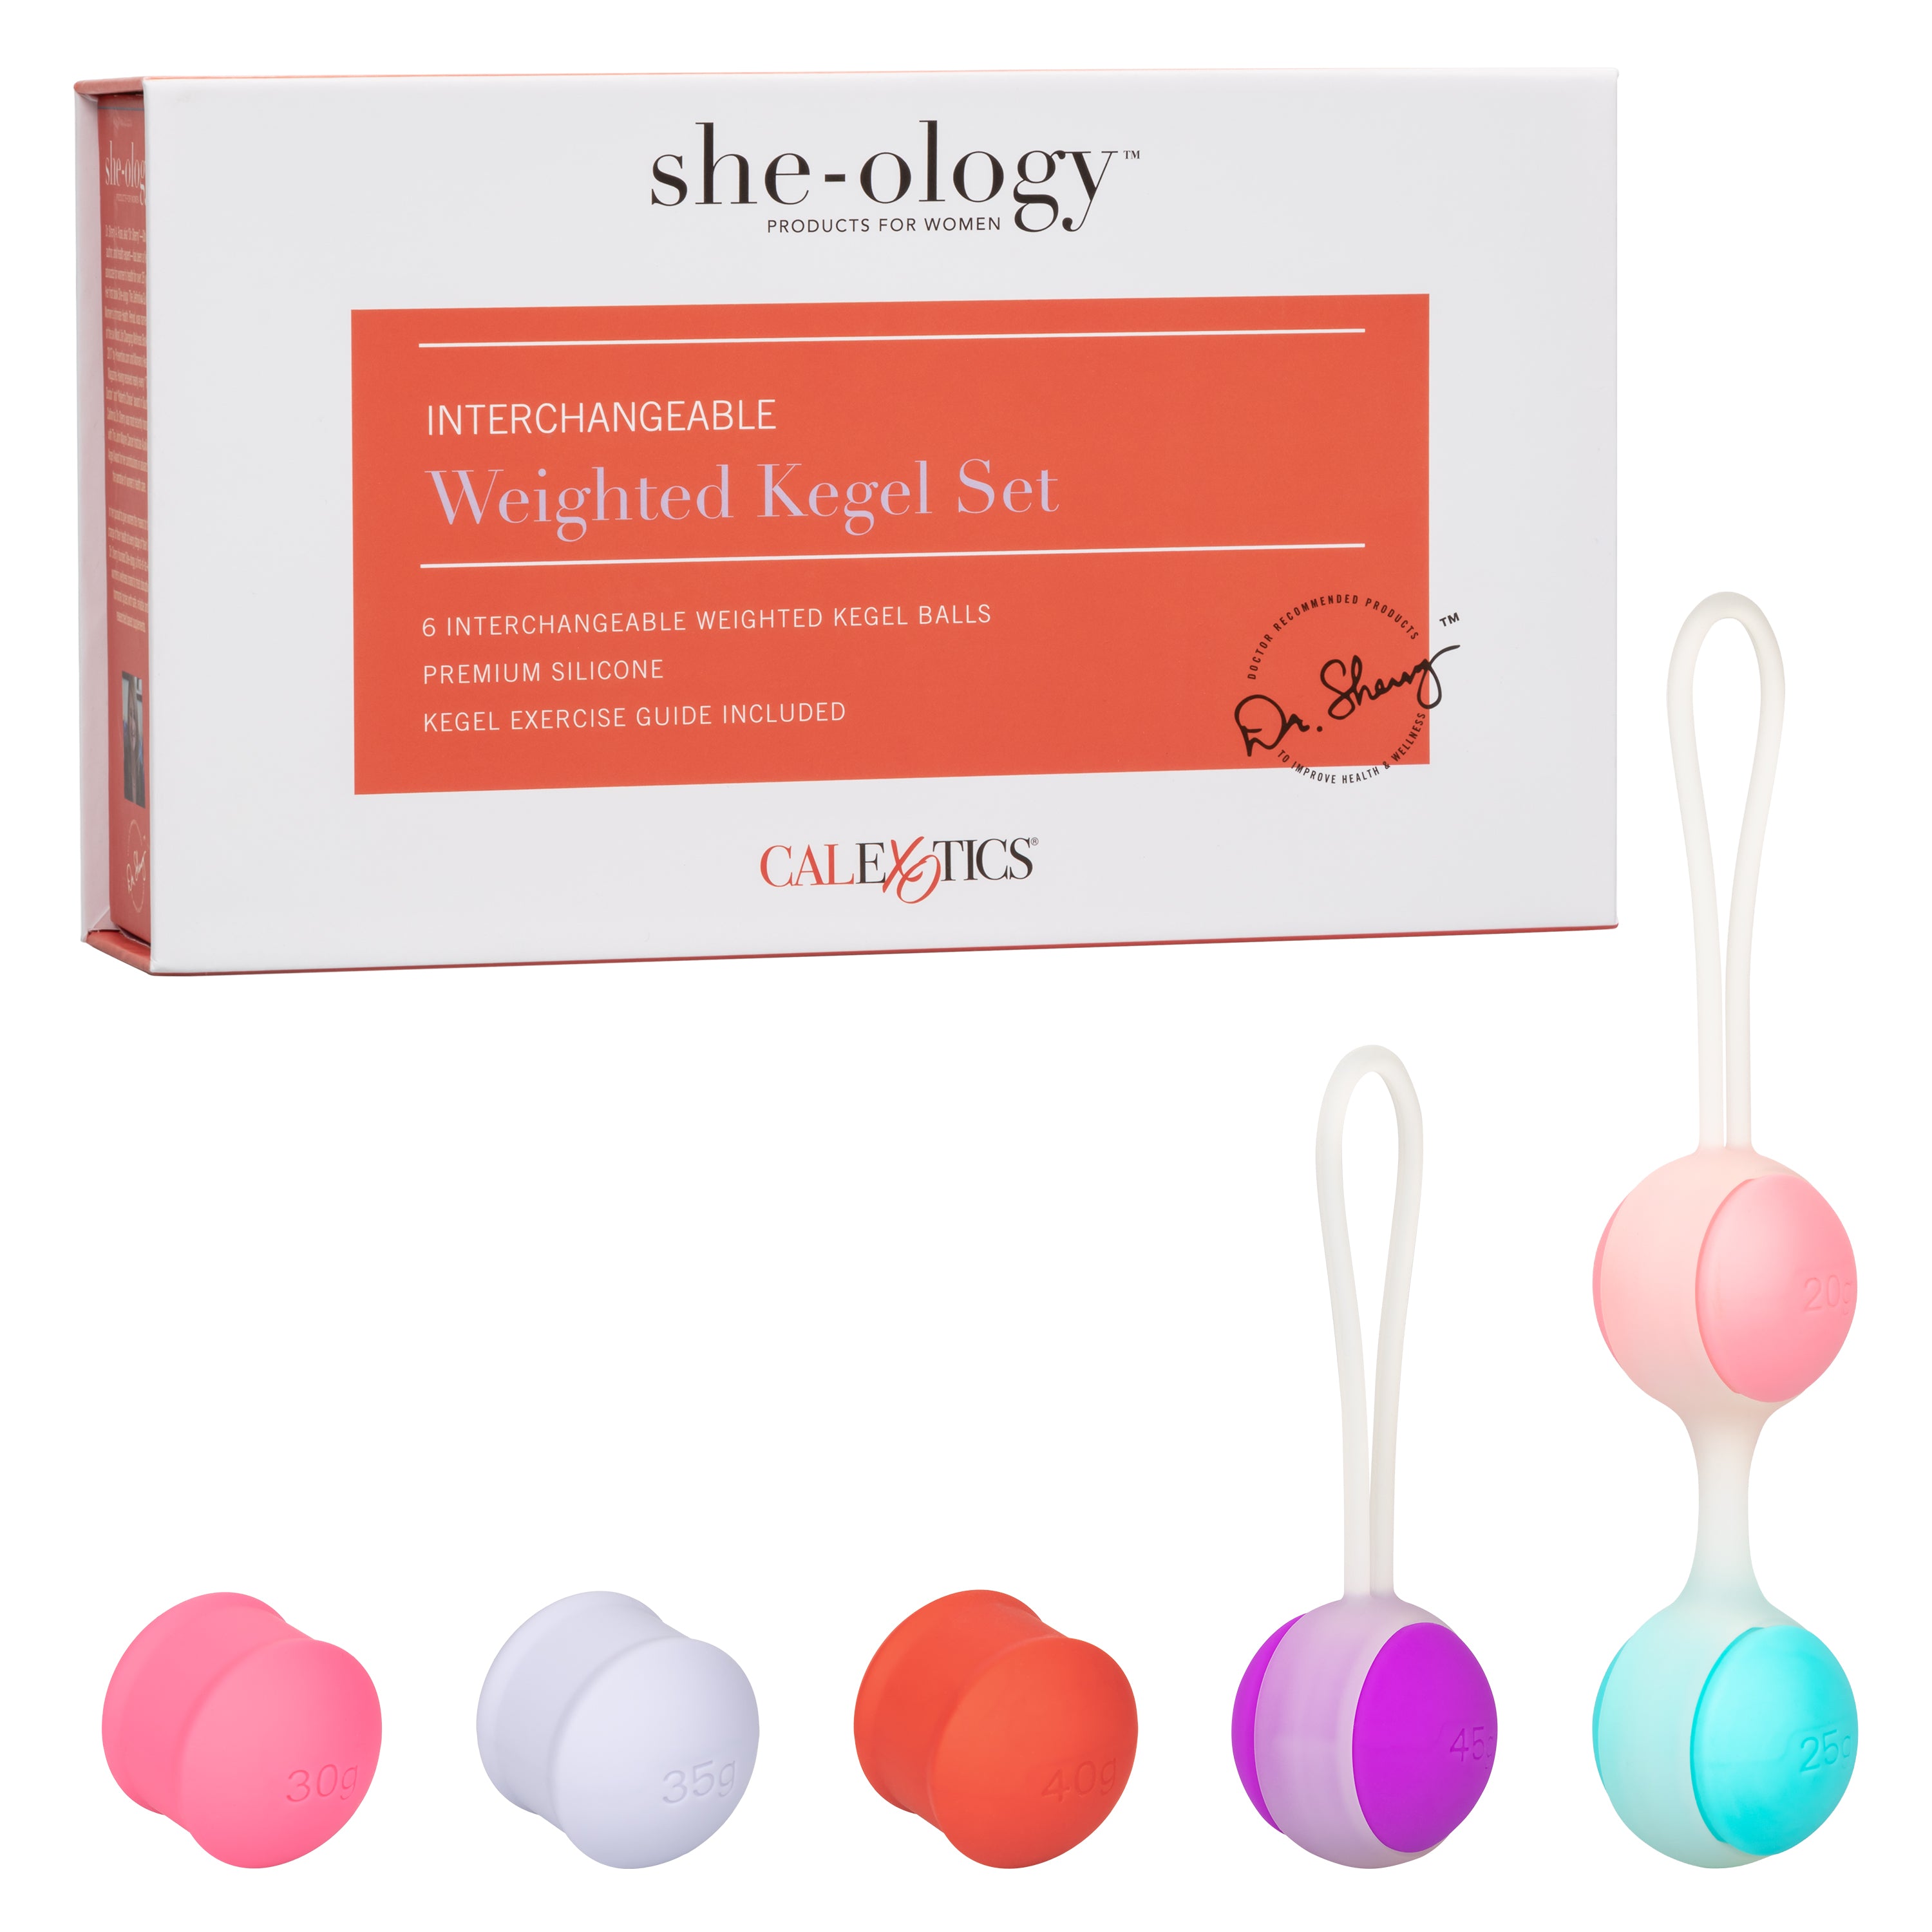 she-ology Interchangeable Kegel Set – she-ology Sexual Wellness Products